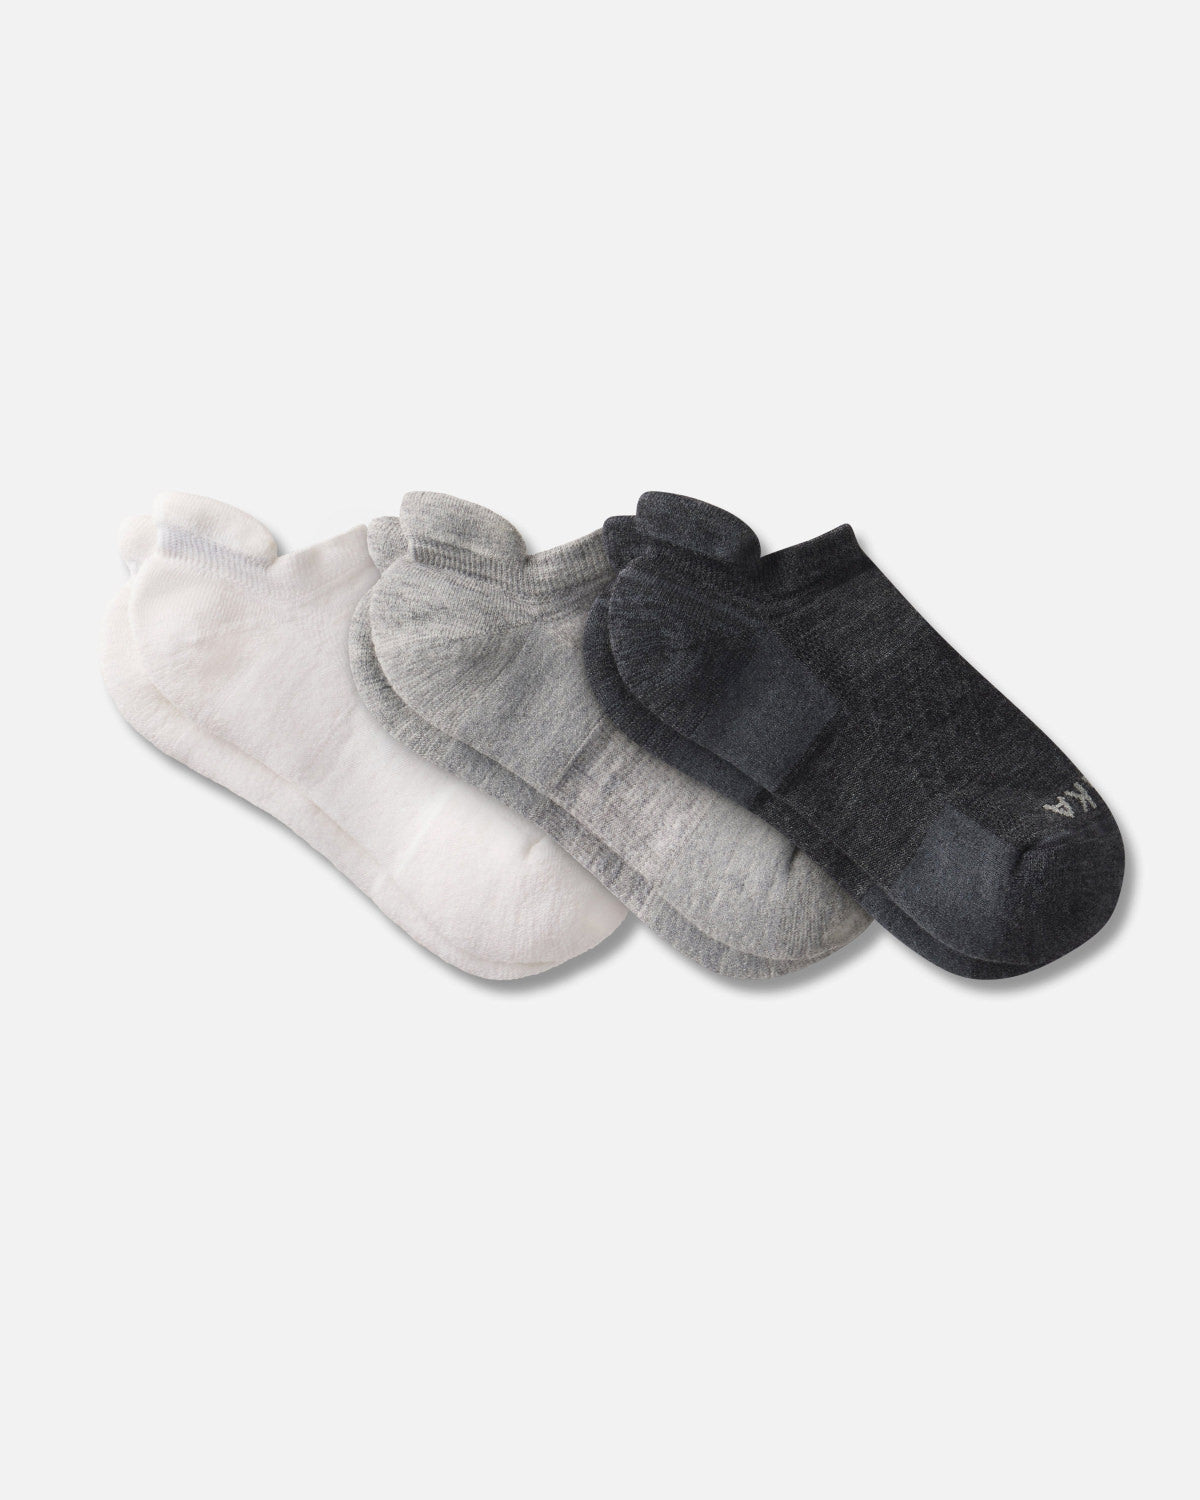 3 pairs of alpaca wool ankle socks in white, light grey, and dark grey